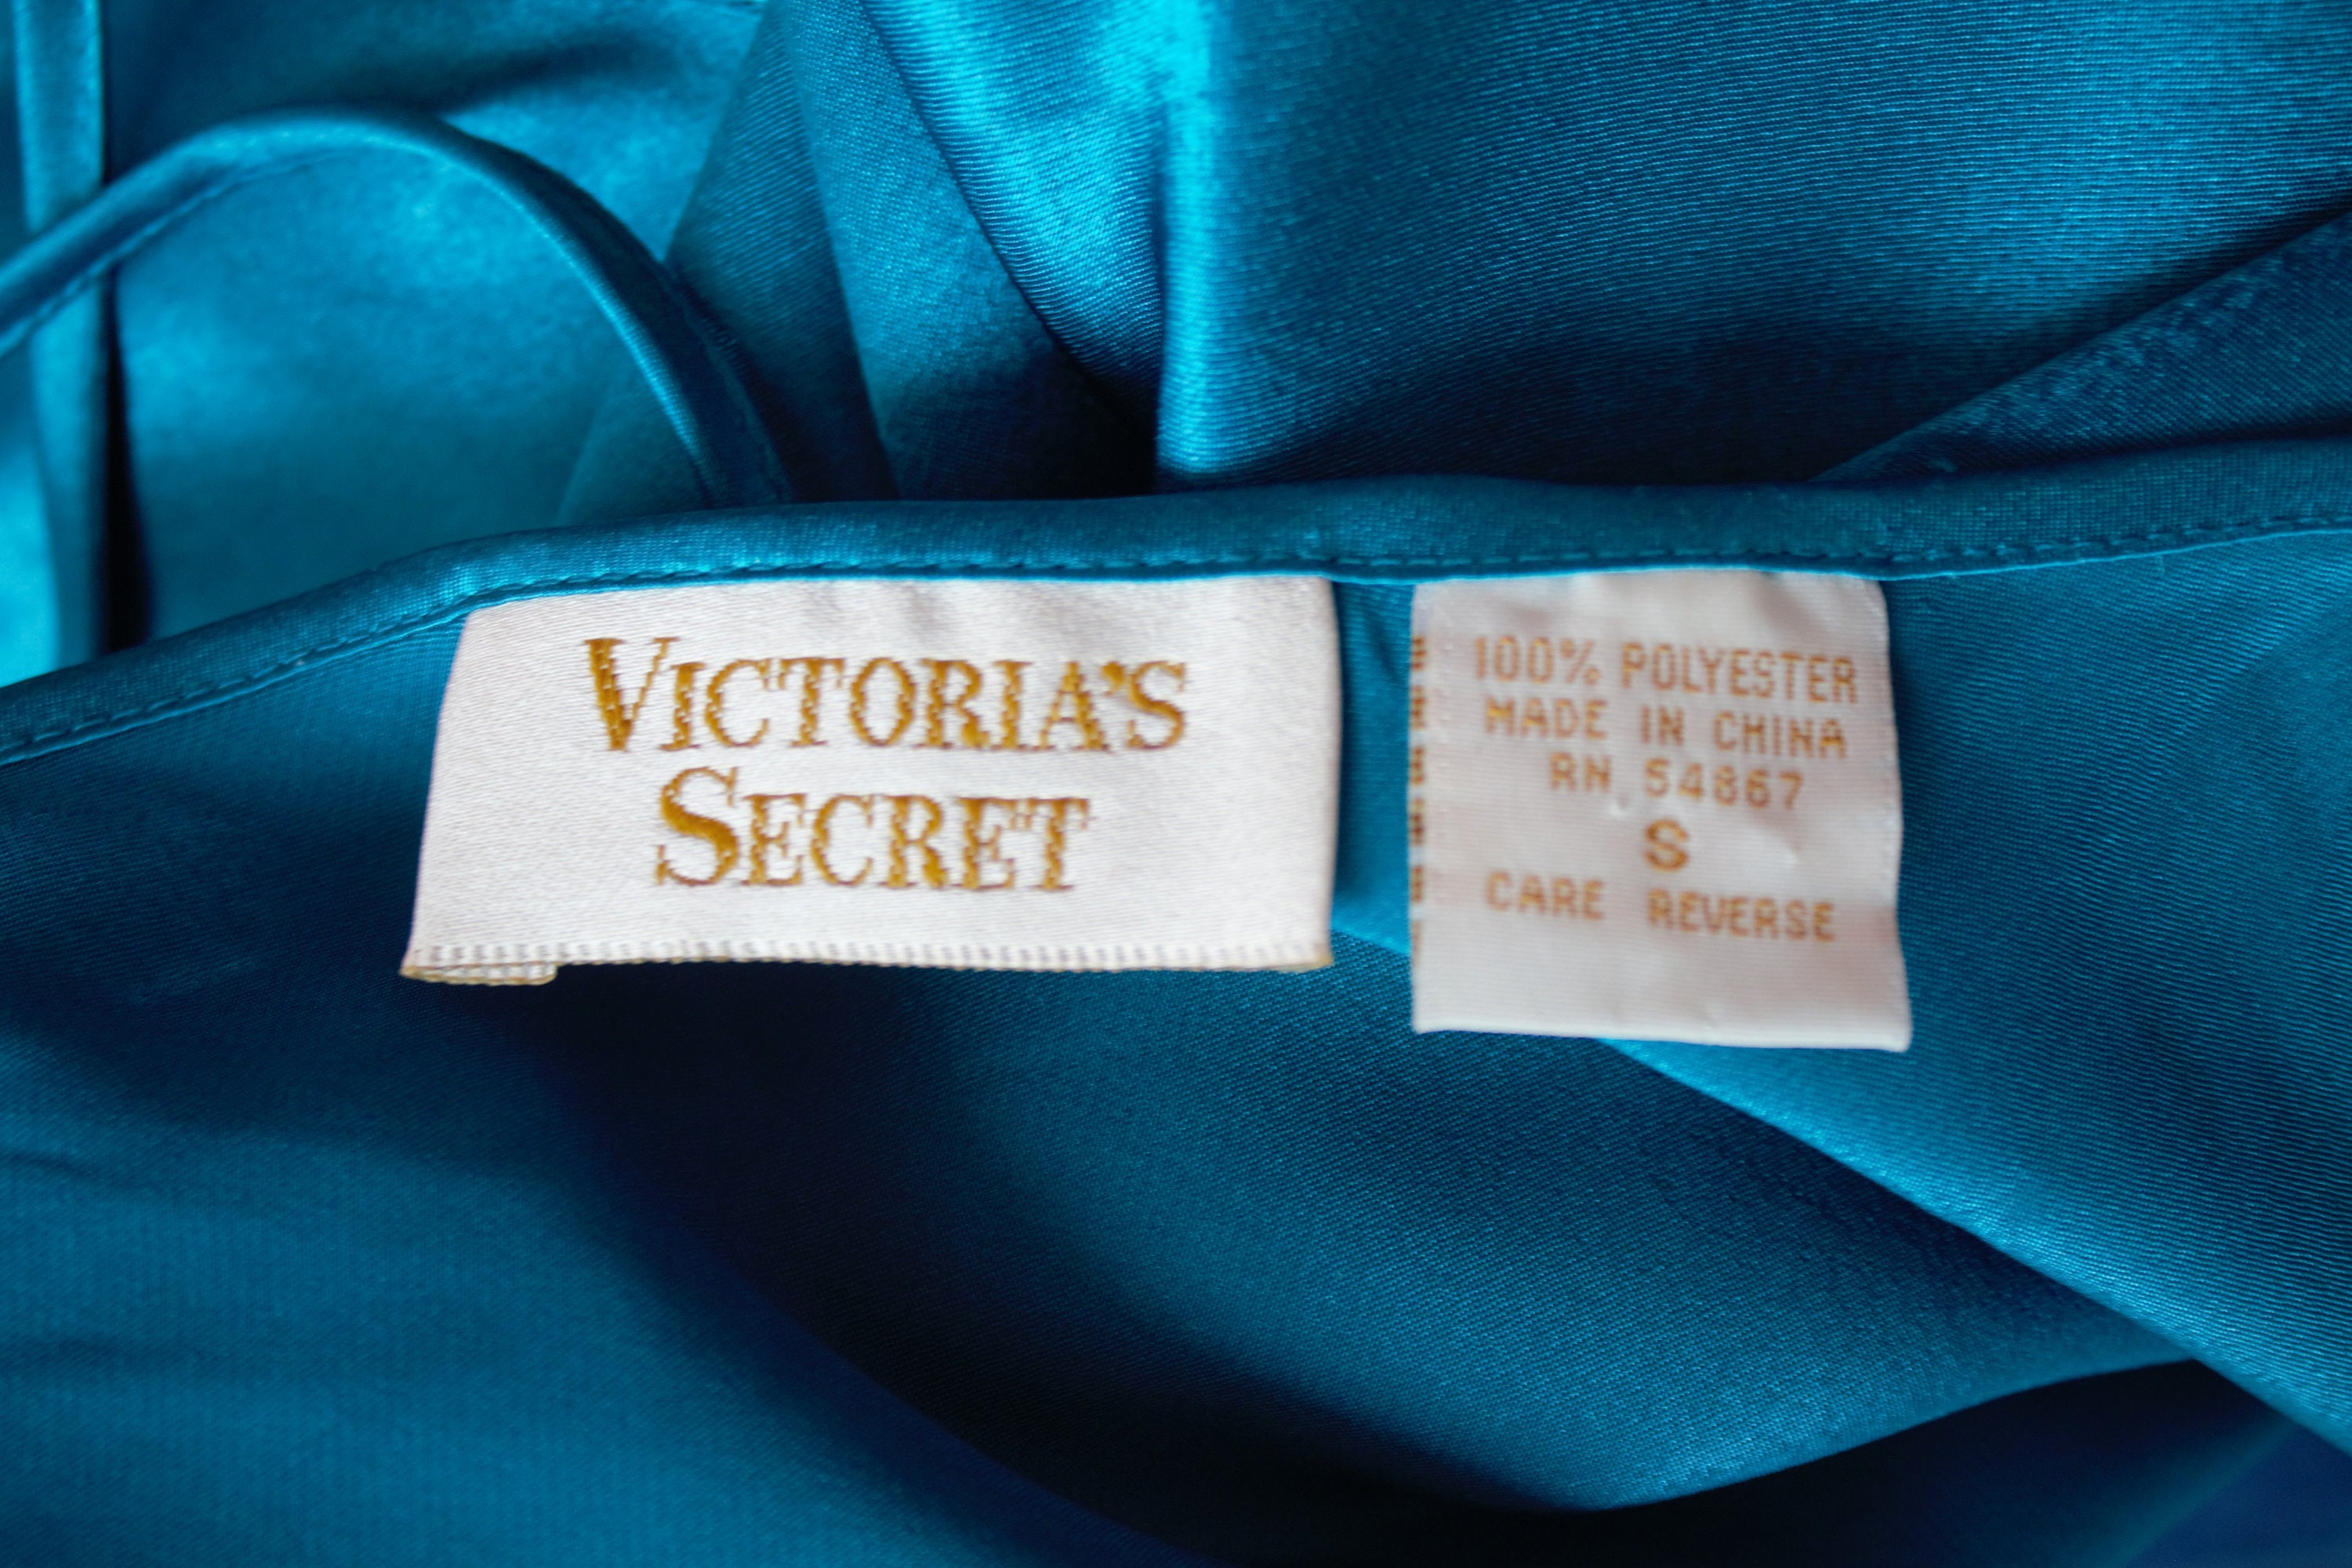 Victoria Secret Turquoise Aqua Satin Chemise, Vintage Camisole Style,  Spaghetti Strap, Slip Lingerie, Gold Label, Size S by Victorias Secret